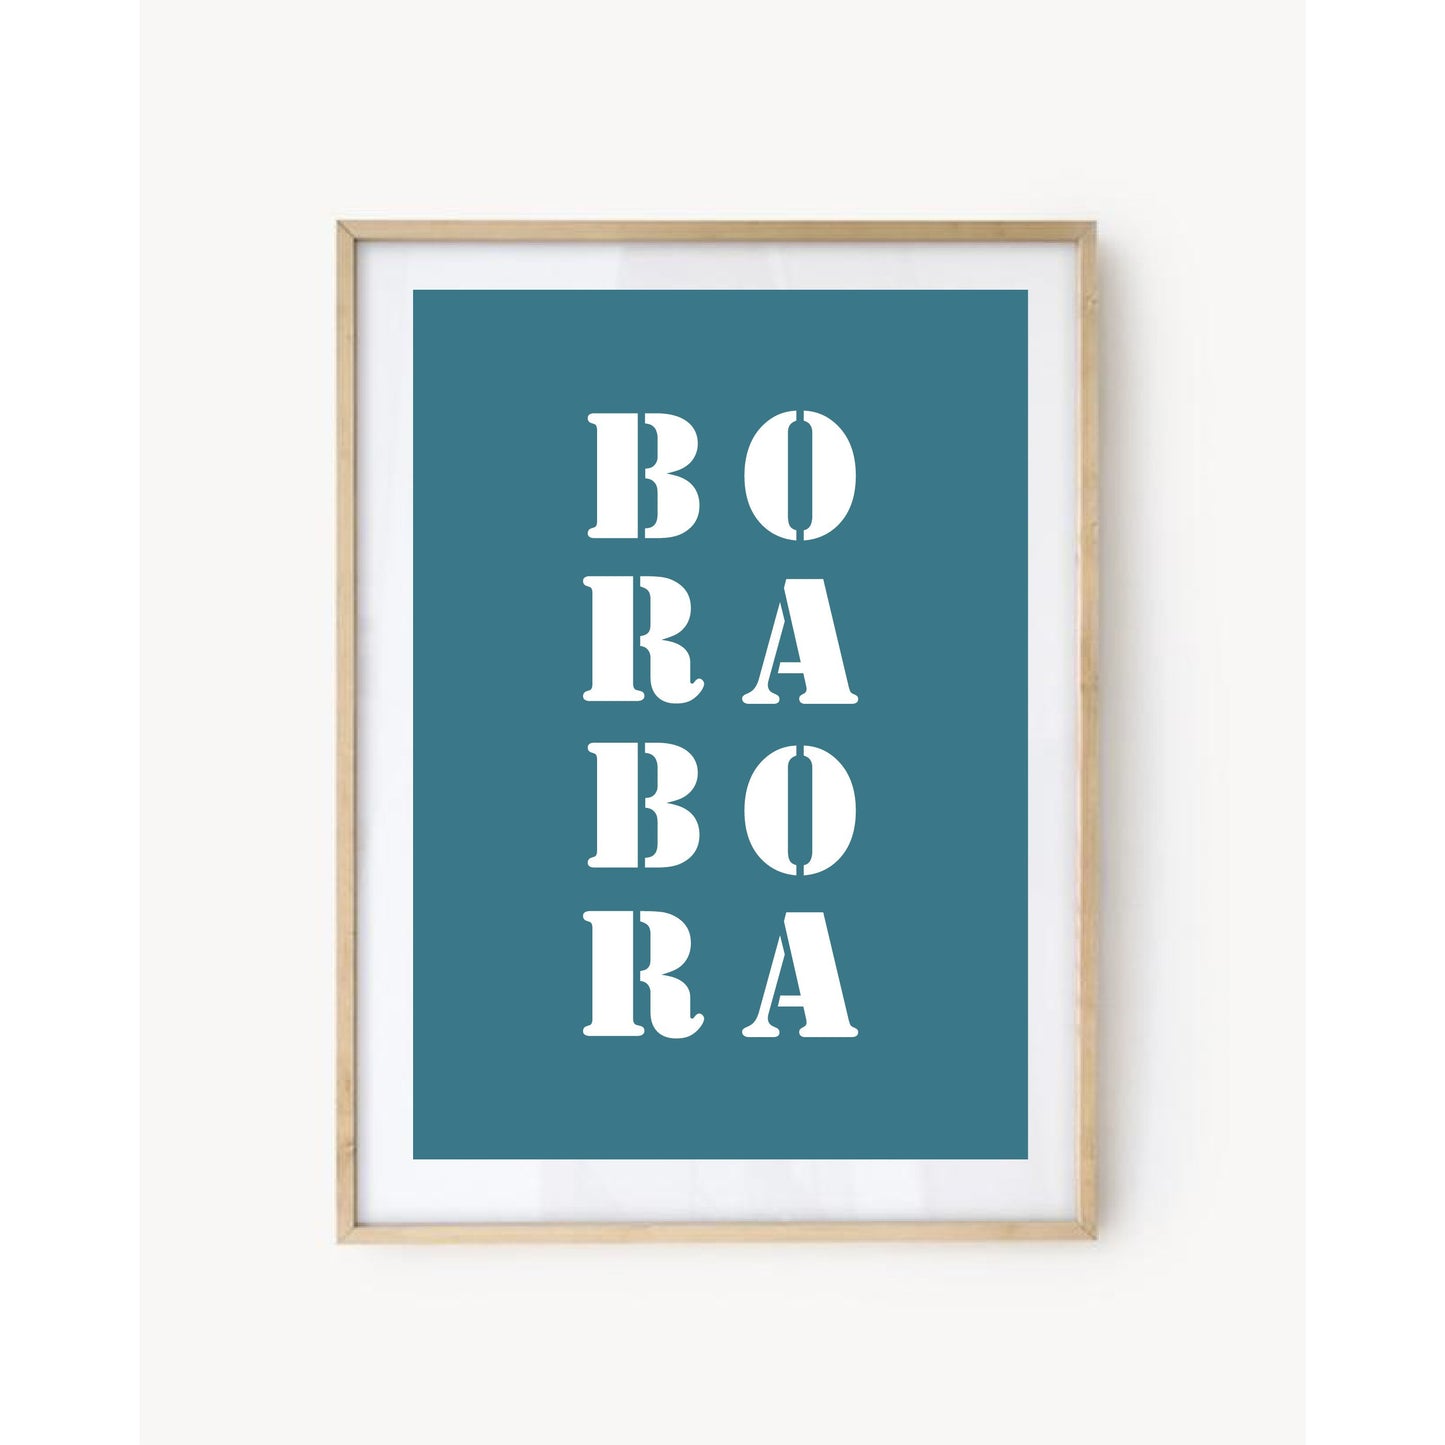 "Bora Bora" poster - Turquoise Blue